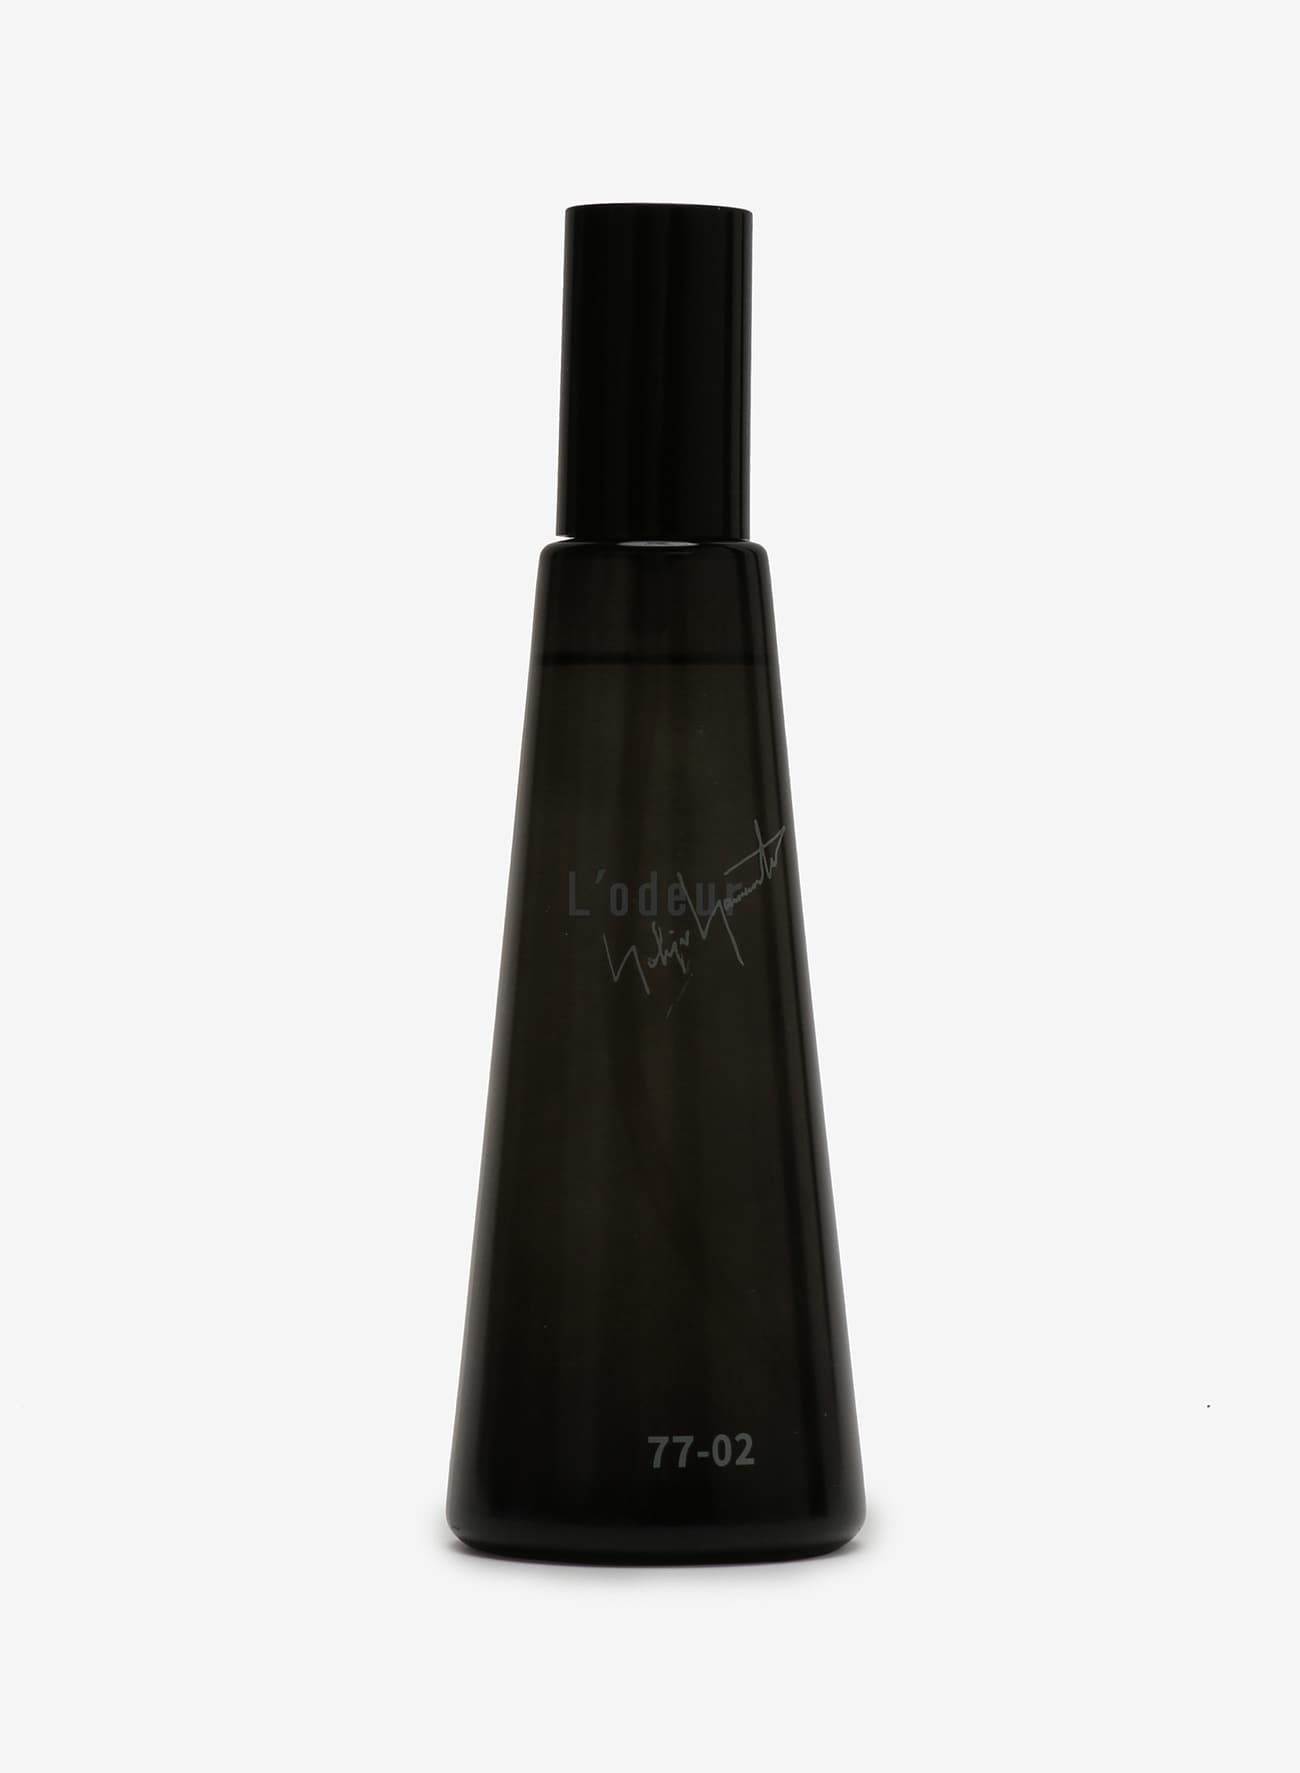 Linen spray 77-02×Sparkling shampoo 77-04